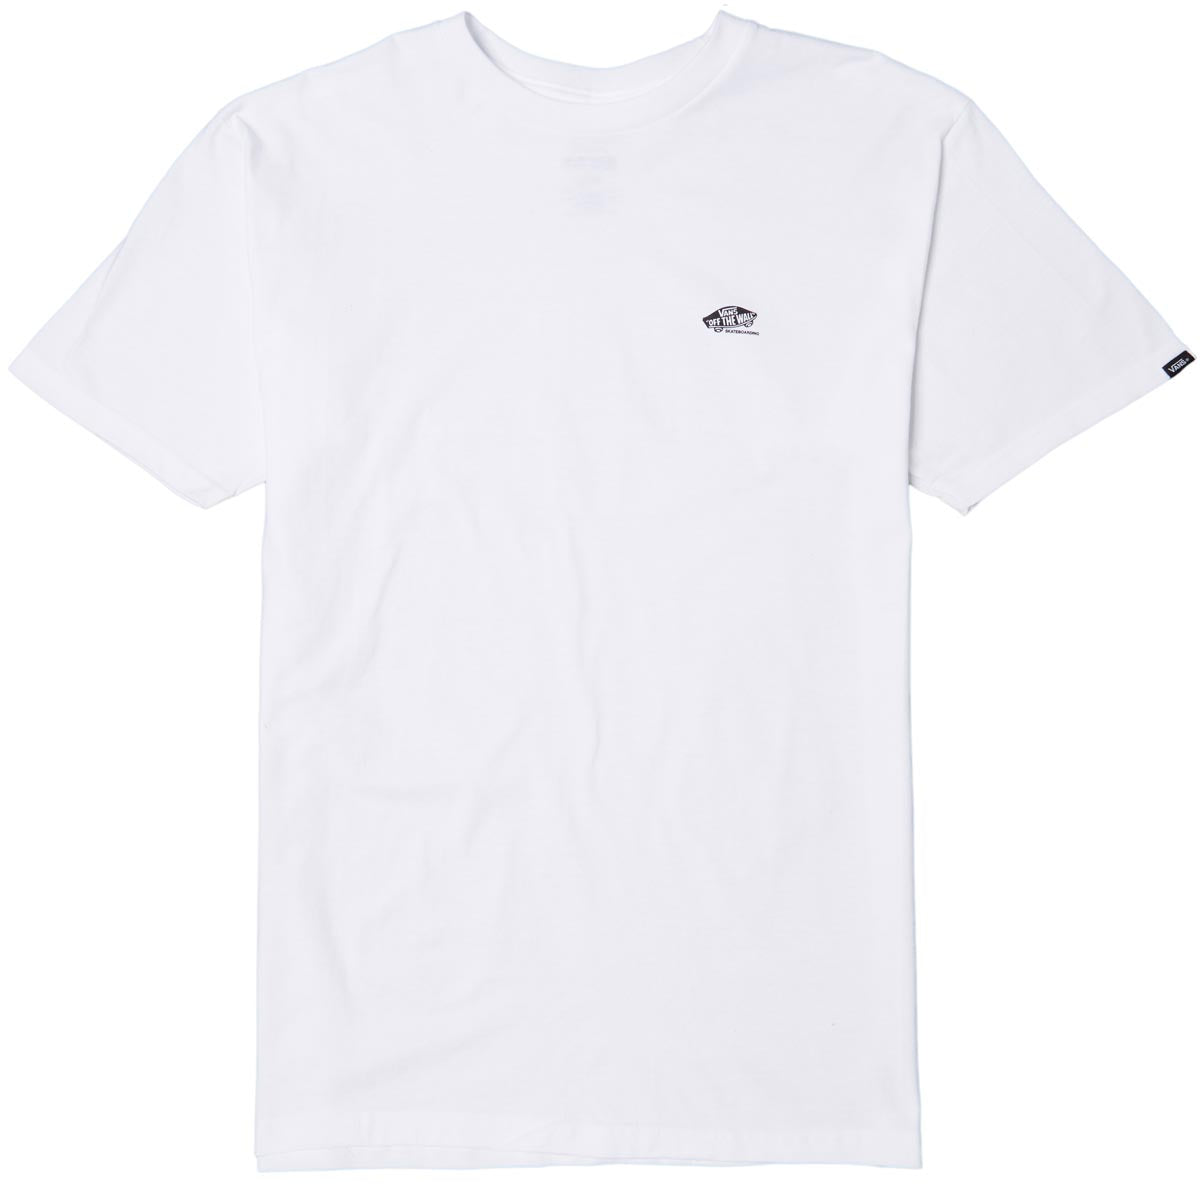 Vans Skate Classics T-Shirt - White image 1